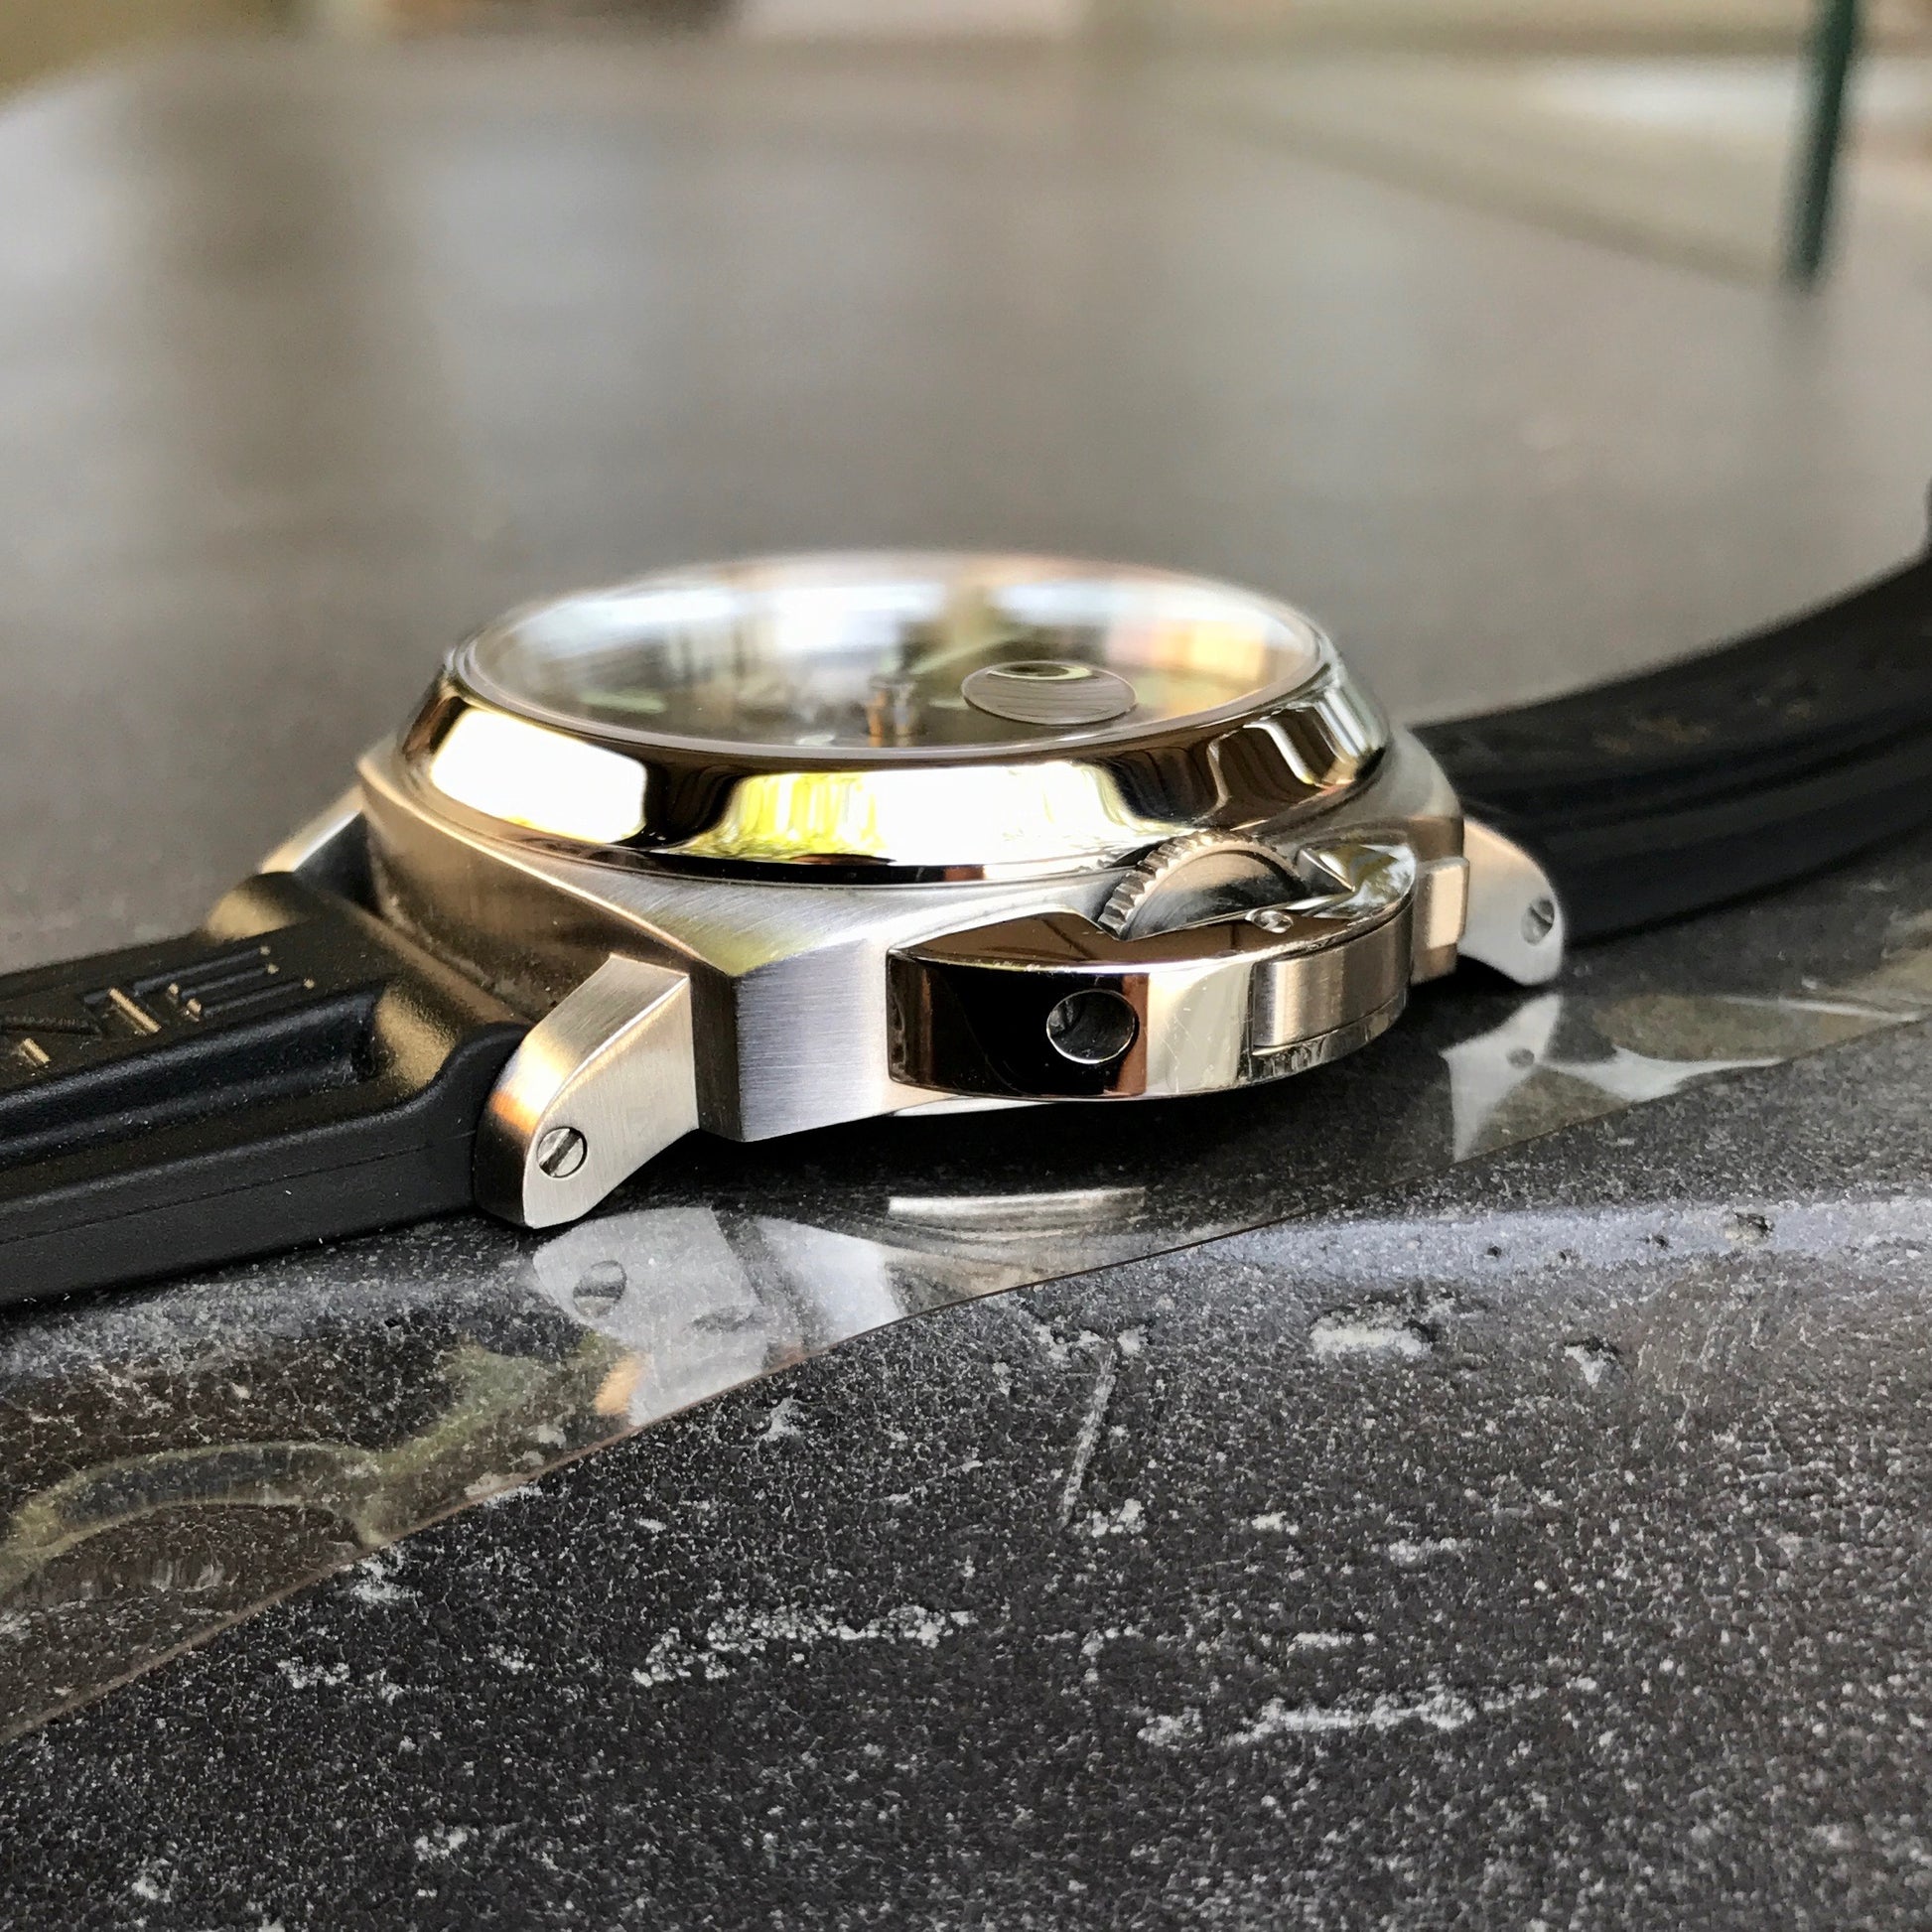 Panerai Luminor PAM 125 40mm Stainless Steel Automatic Wristwatch Box Papers - Hashtag Watch Company